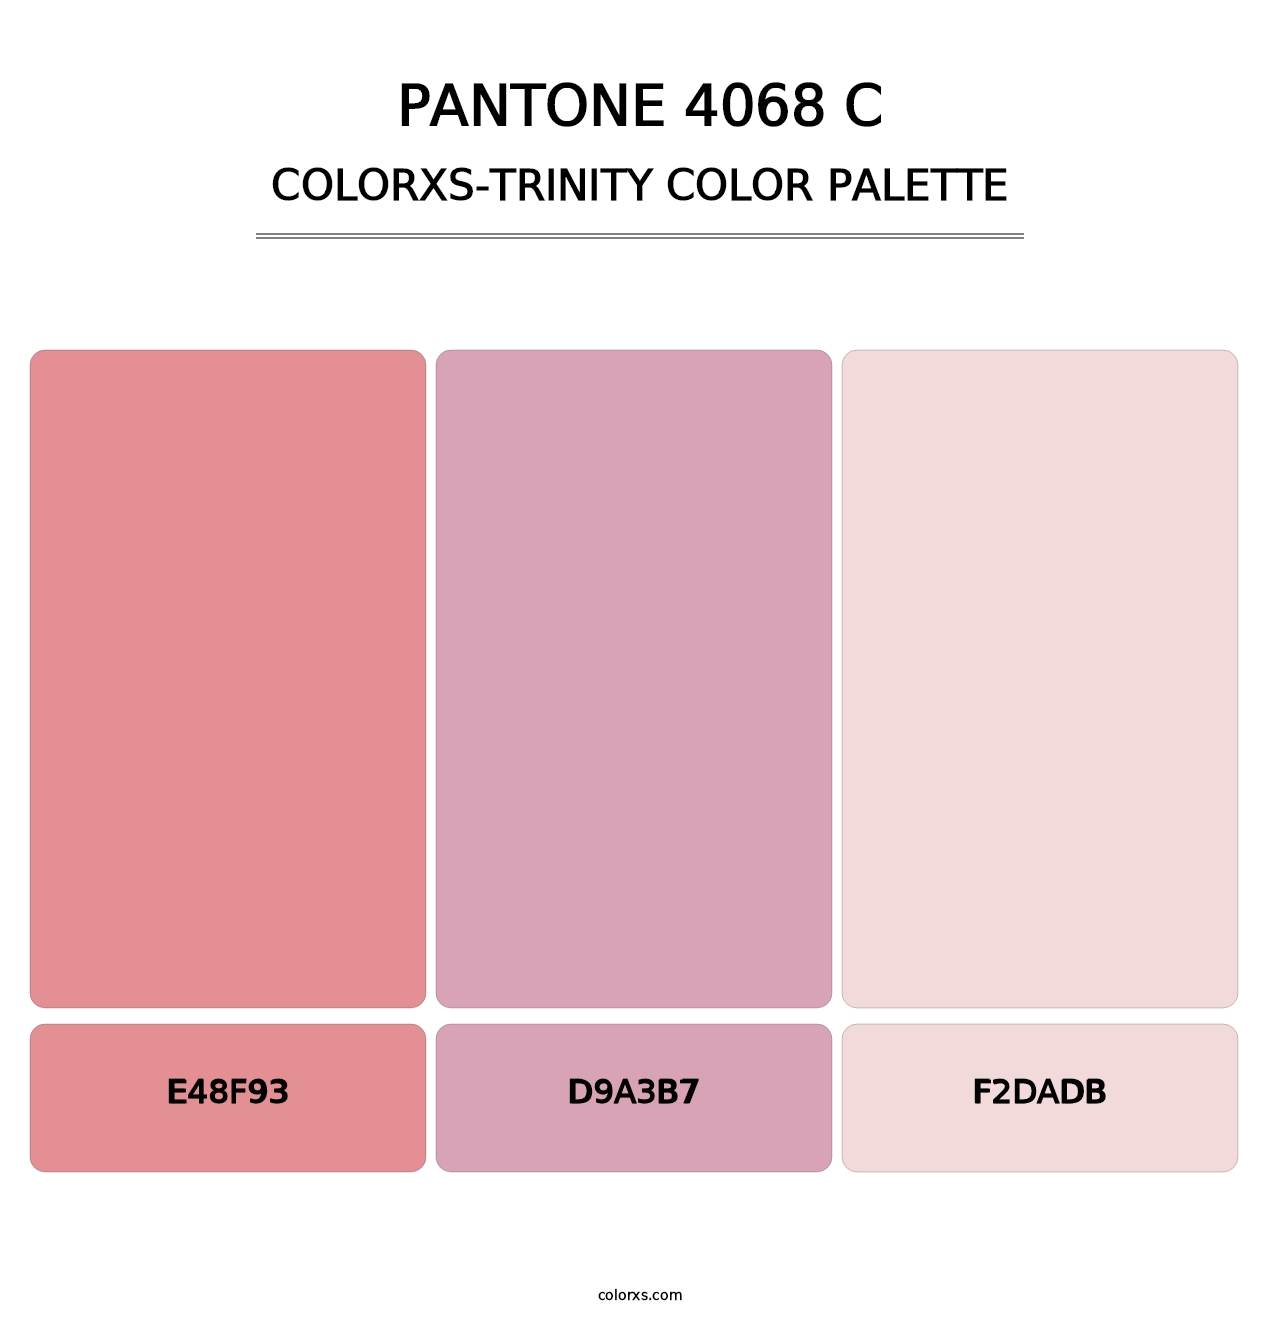 PANTONE 4068 C - Colorxs Trinity Palette